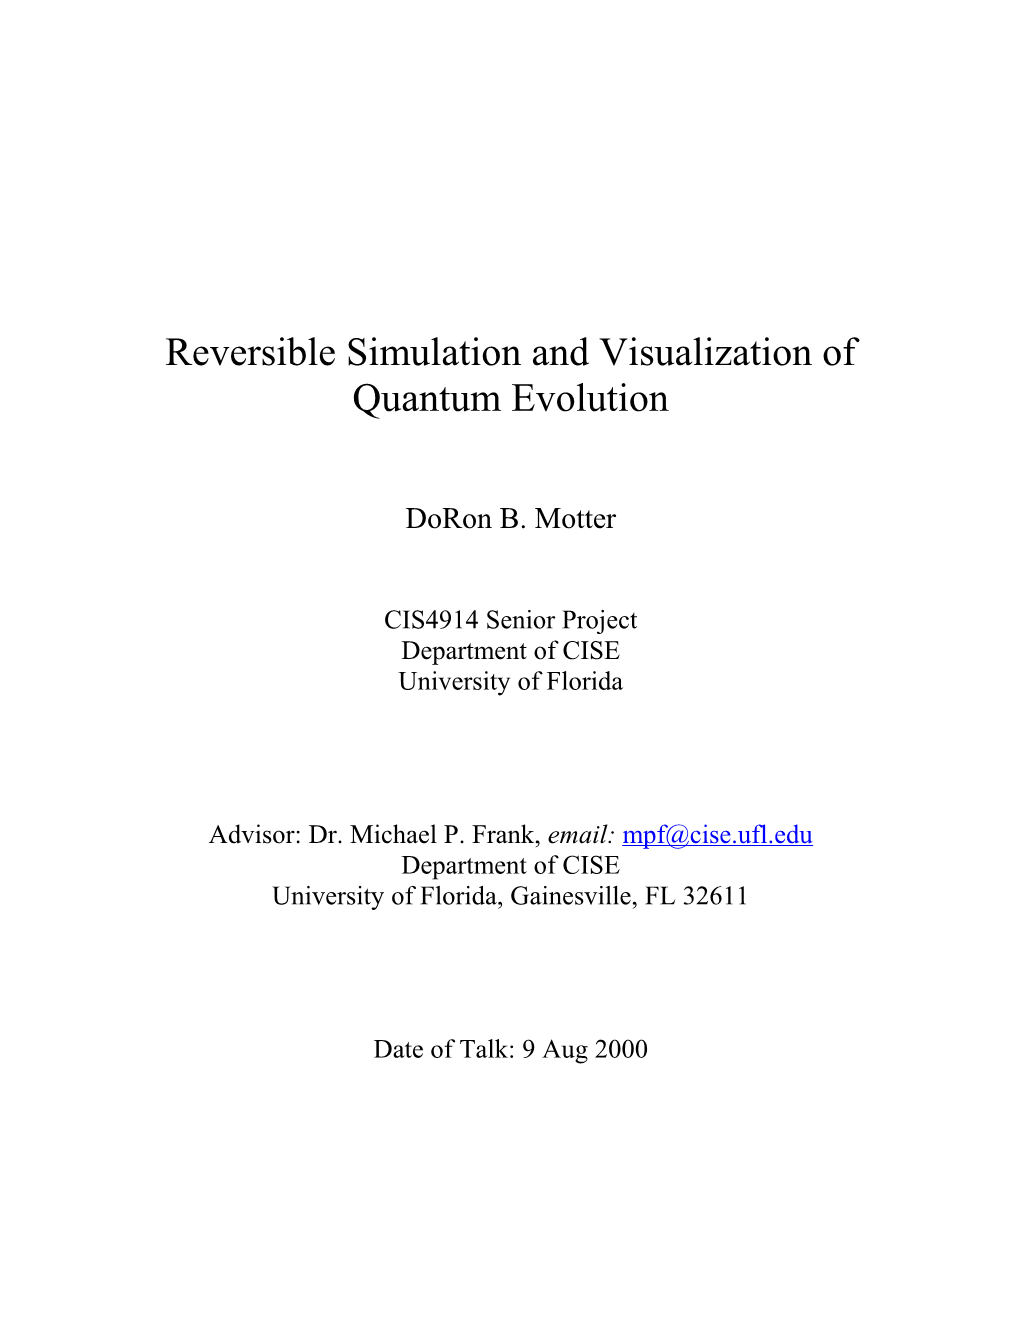 Reversible Simulation and Visualization of Quantum Evolution